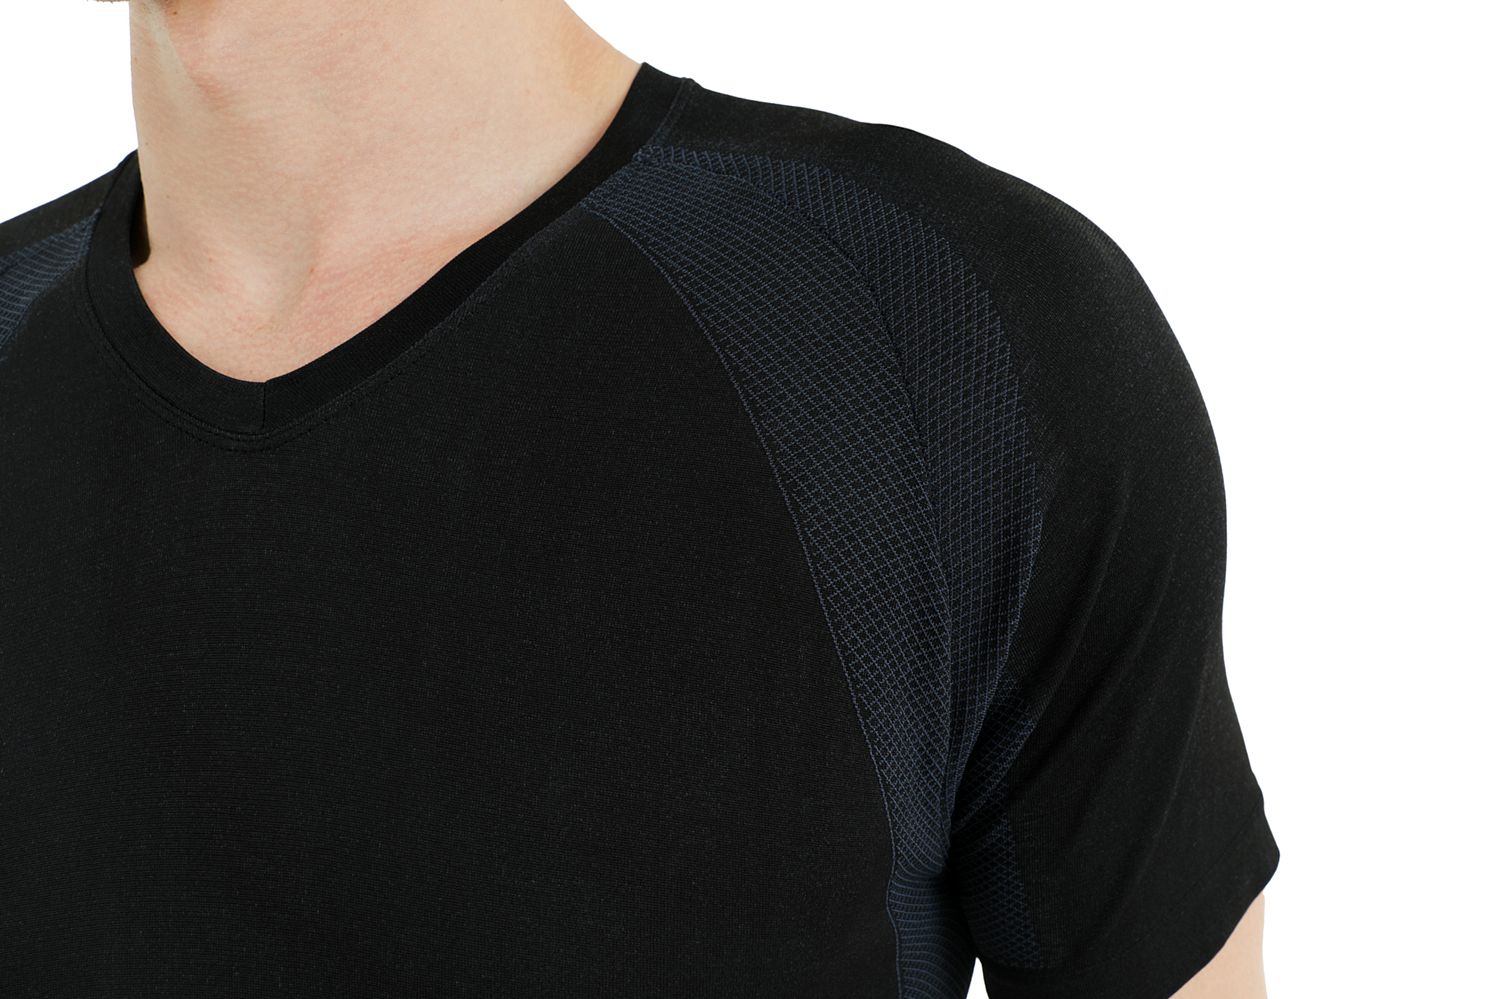 Футболка Accapi Skin Tech Short Sleeve Shirt Men's Black